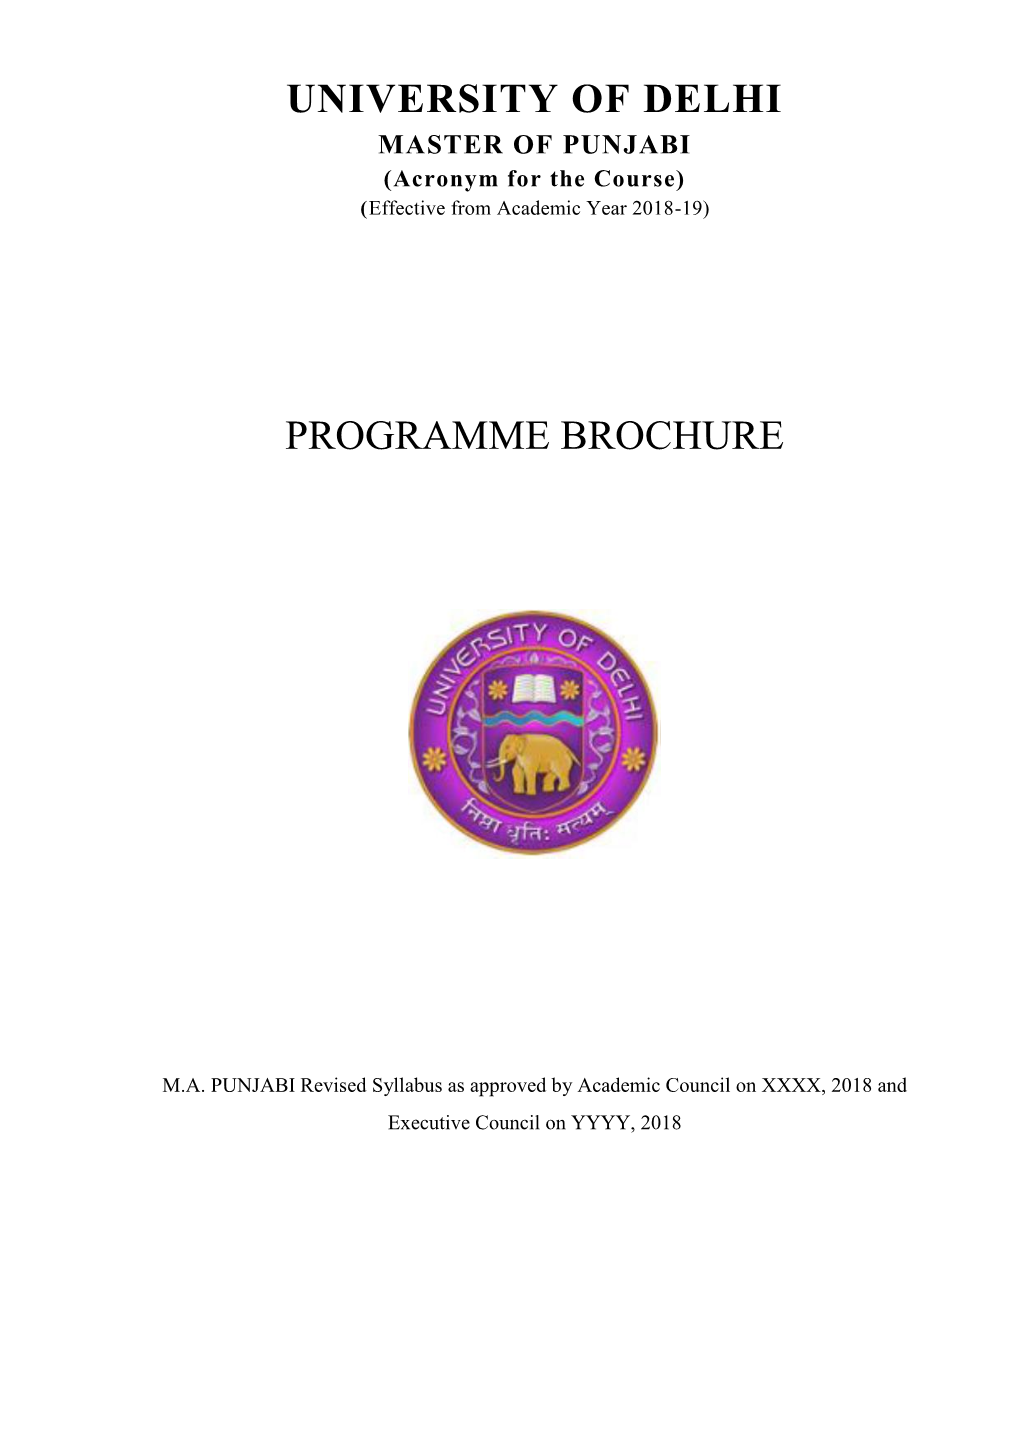 University of Delhi Programme Brochure